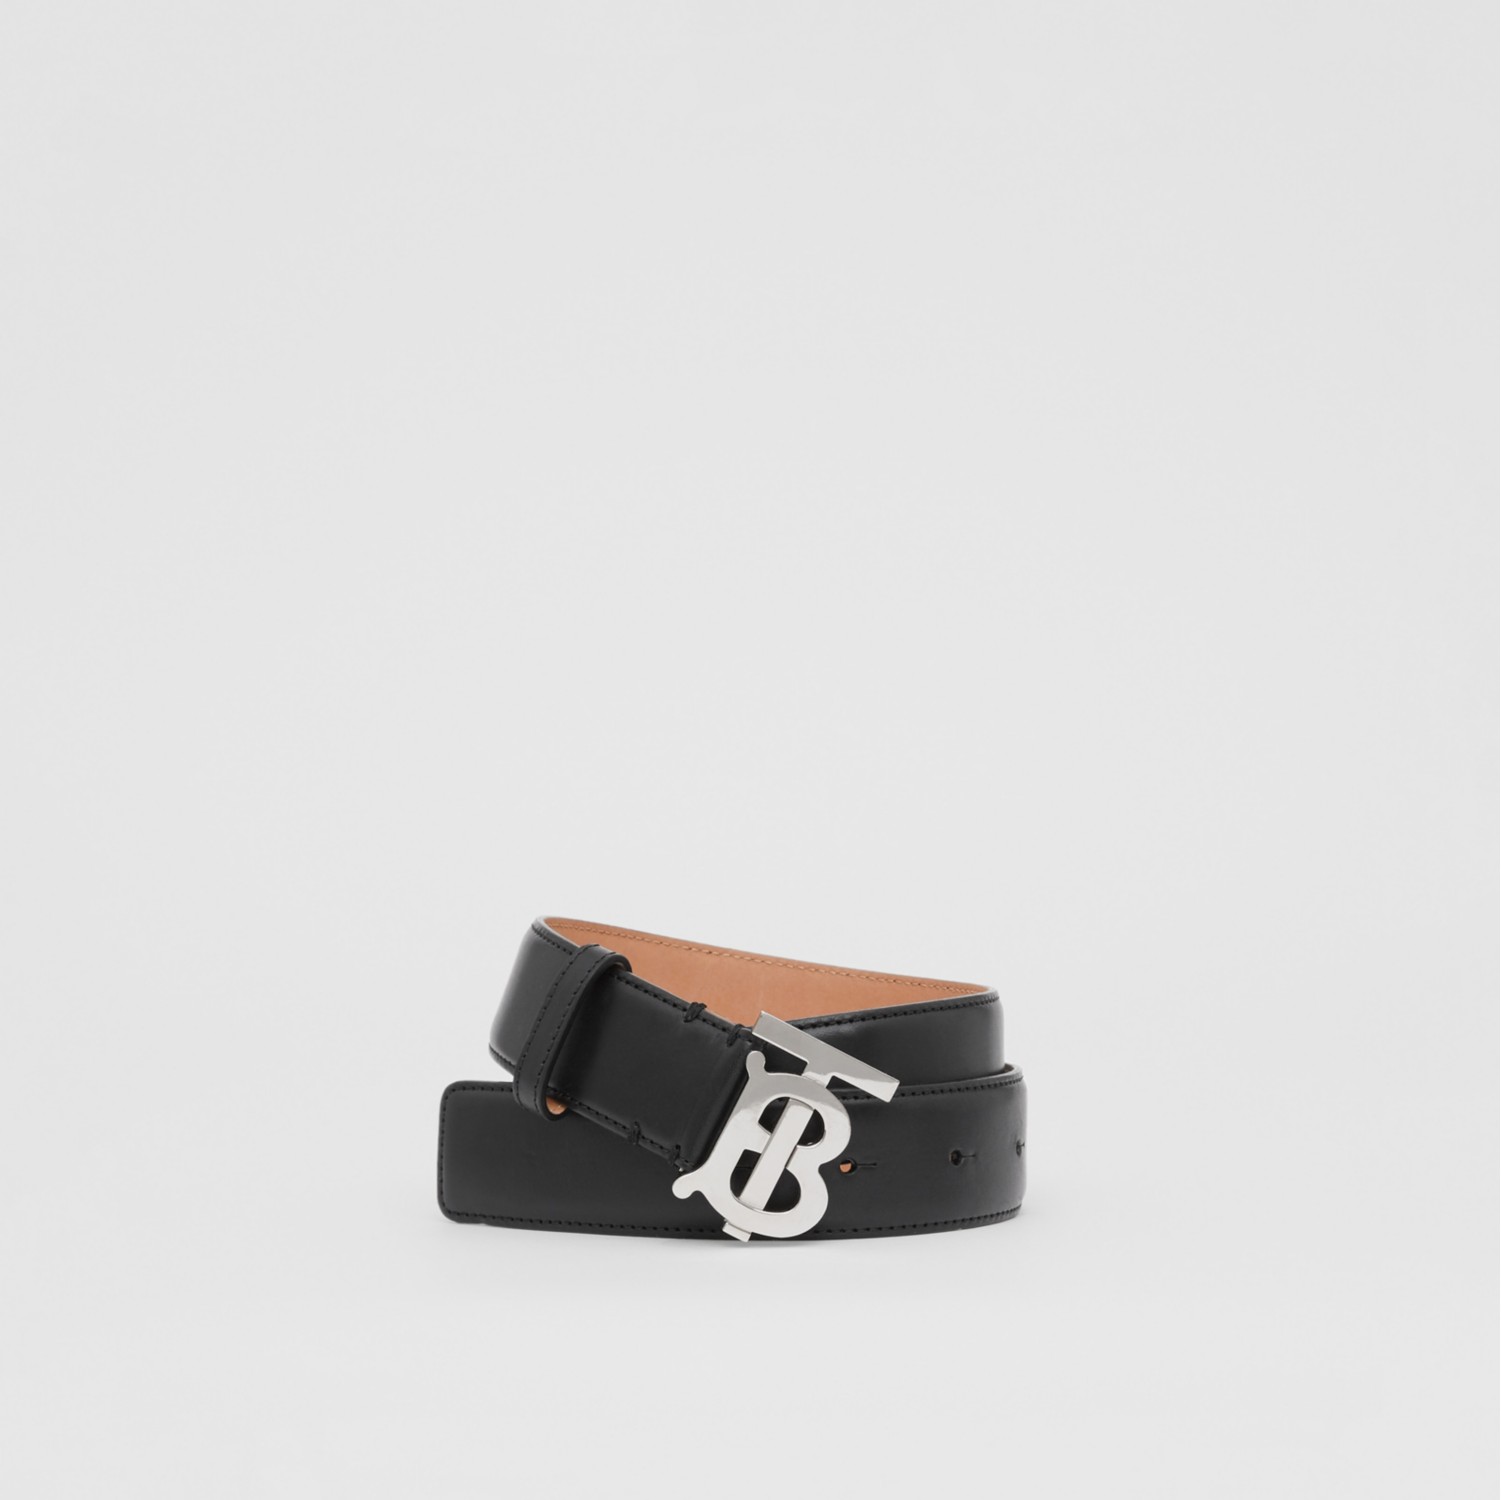 BURBERRY: TB leather belt - Black